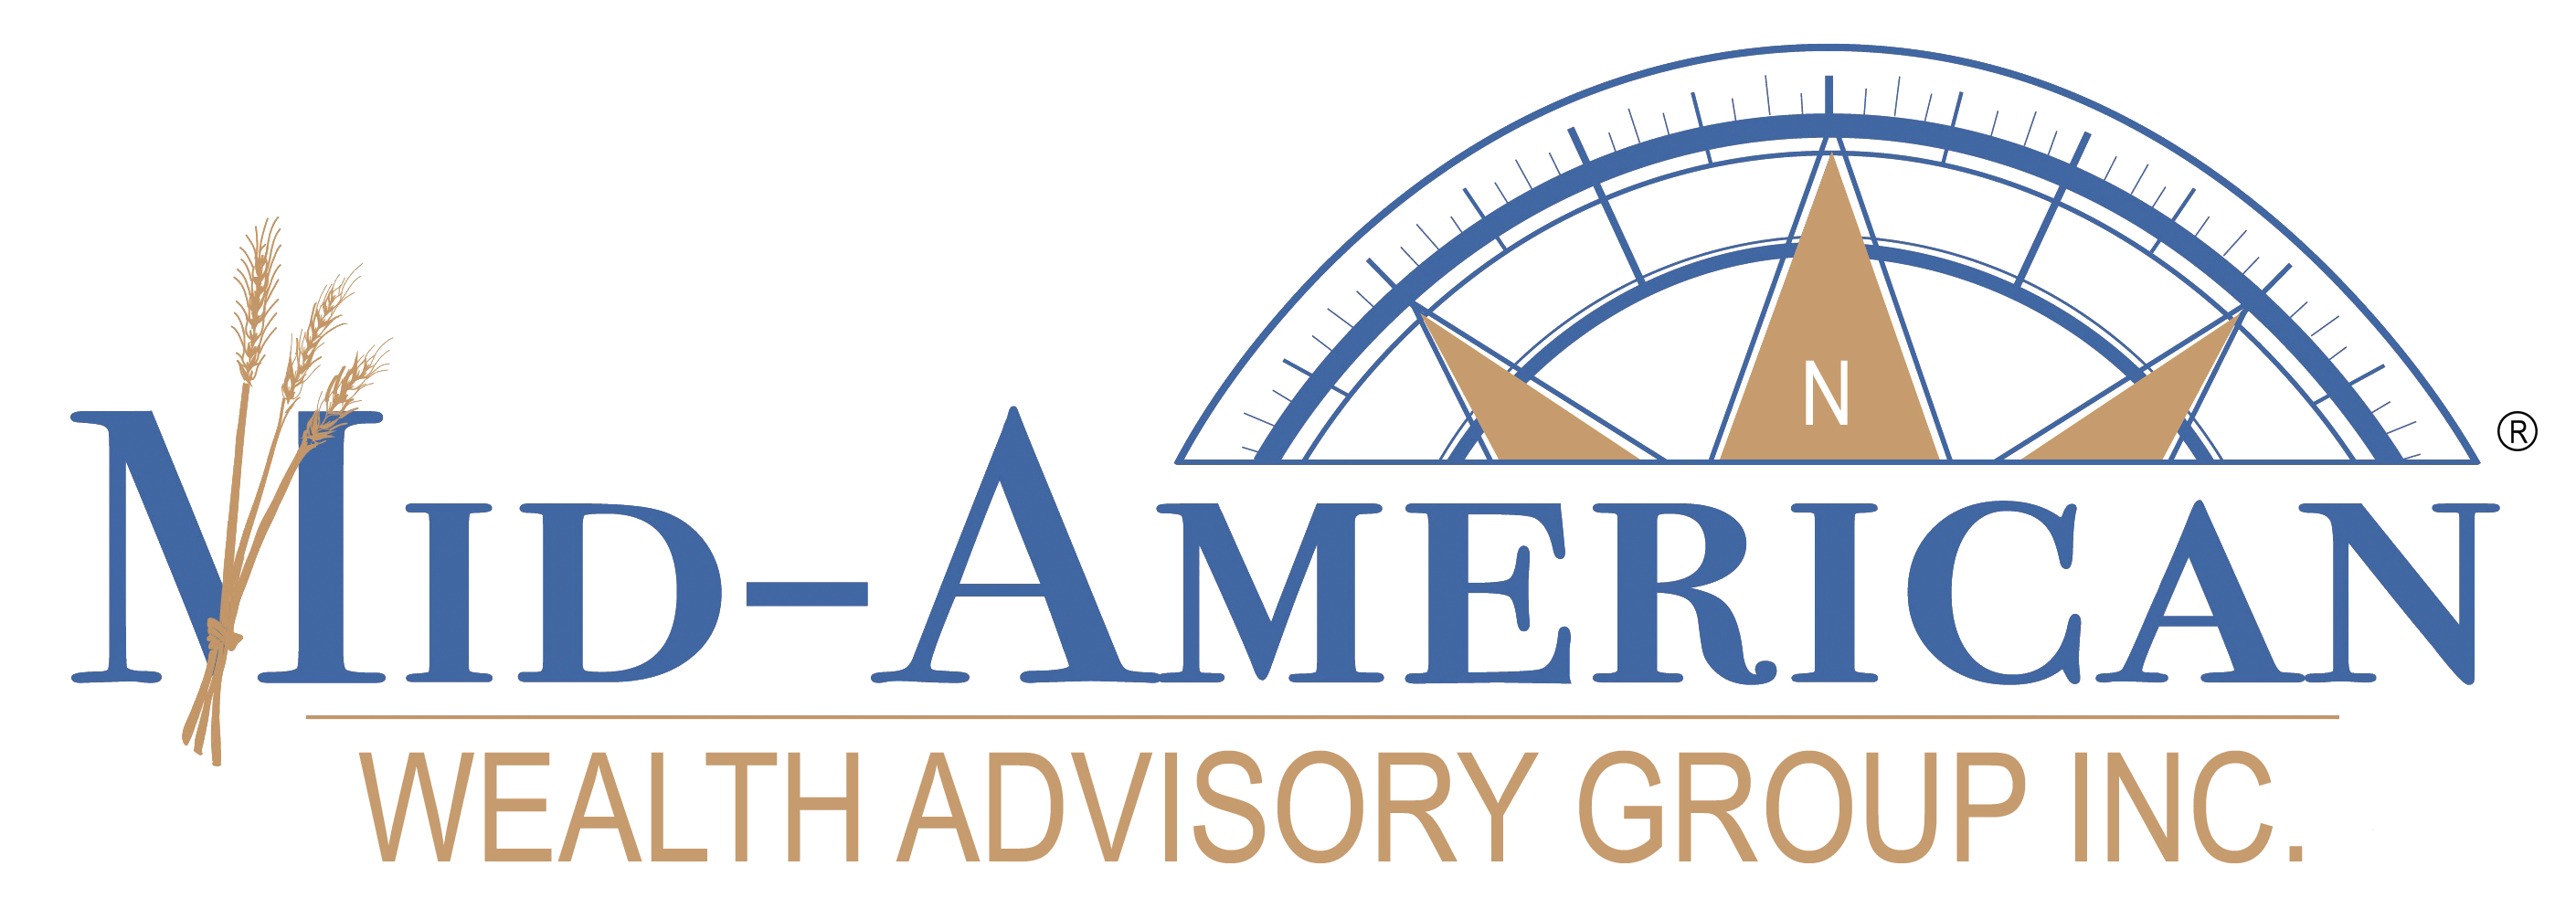 Mid-American Wealth Advisory Group Inc.